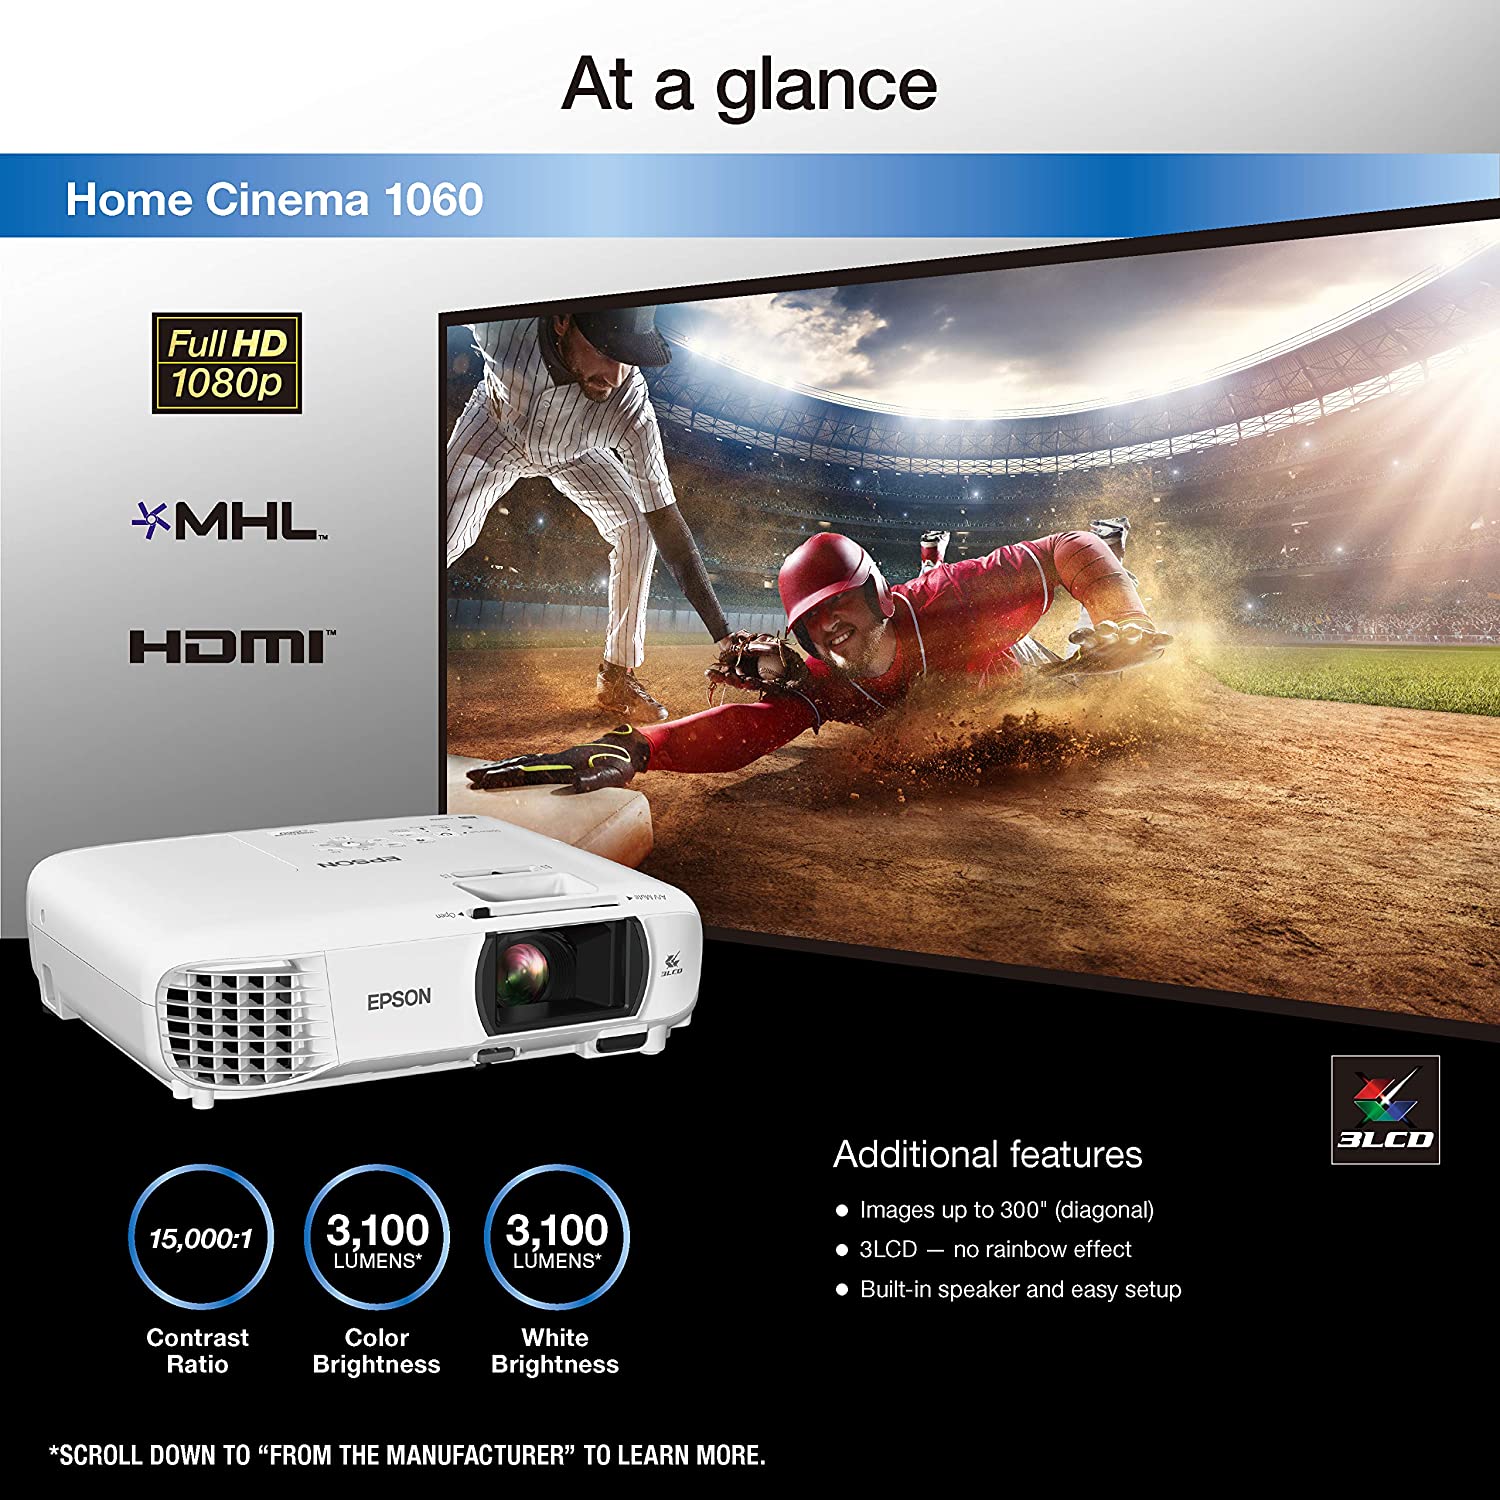 Epson Home Cinema 1060 Full HD 1080p 3,100 Lumens Color Brightness (Color Light Output) 3,100 Lumens White Brightness